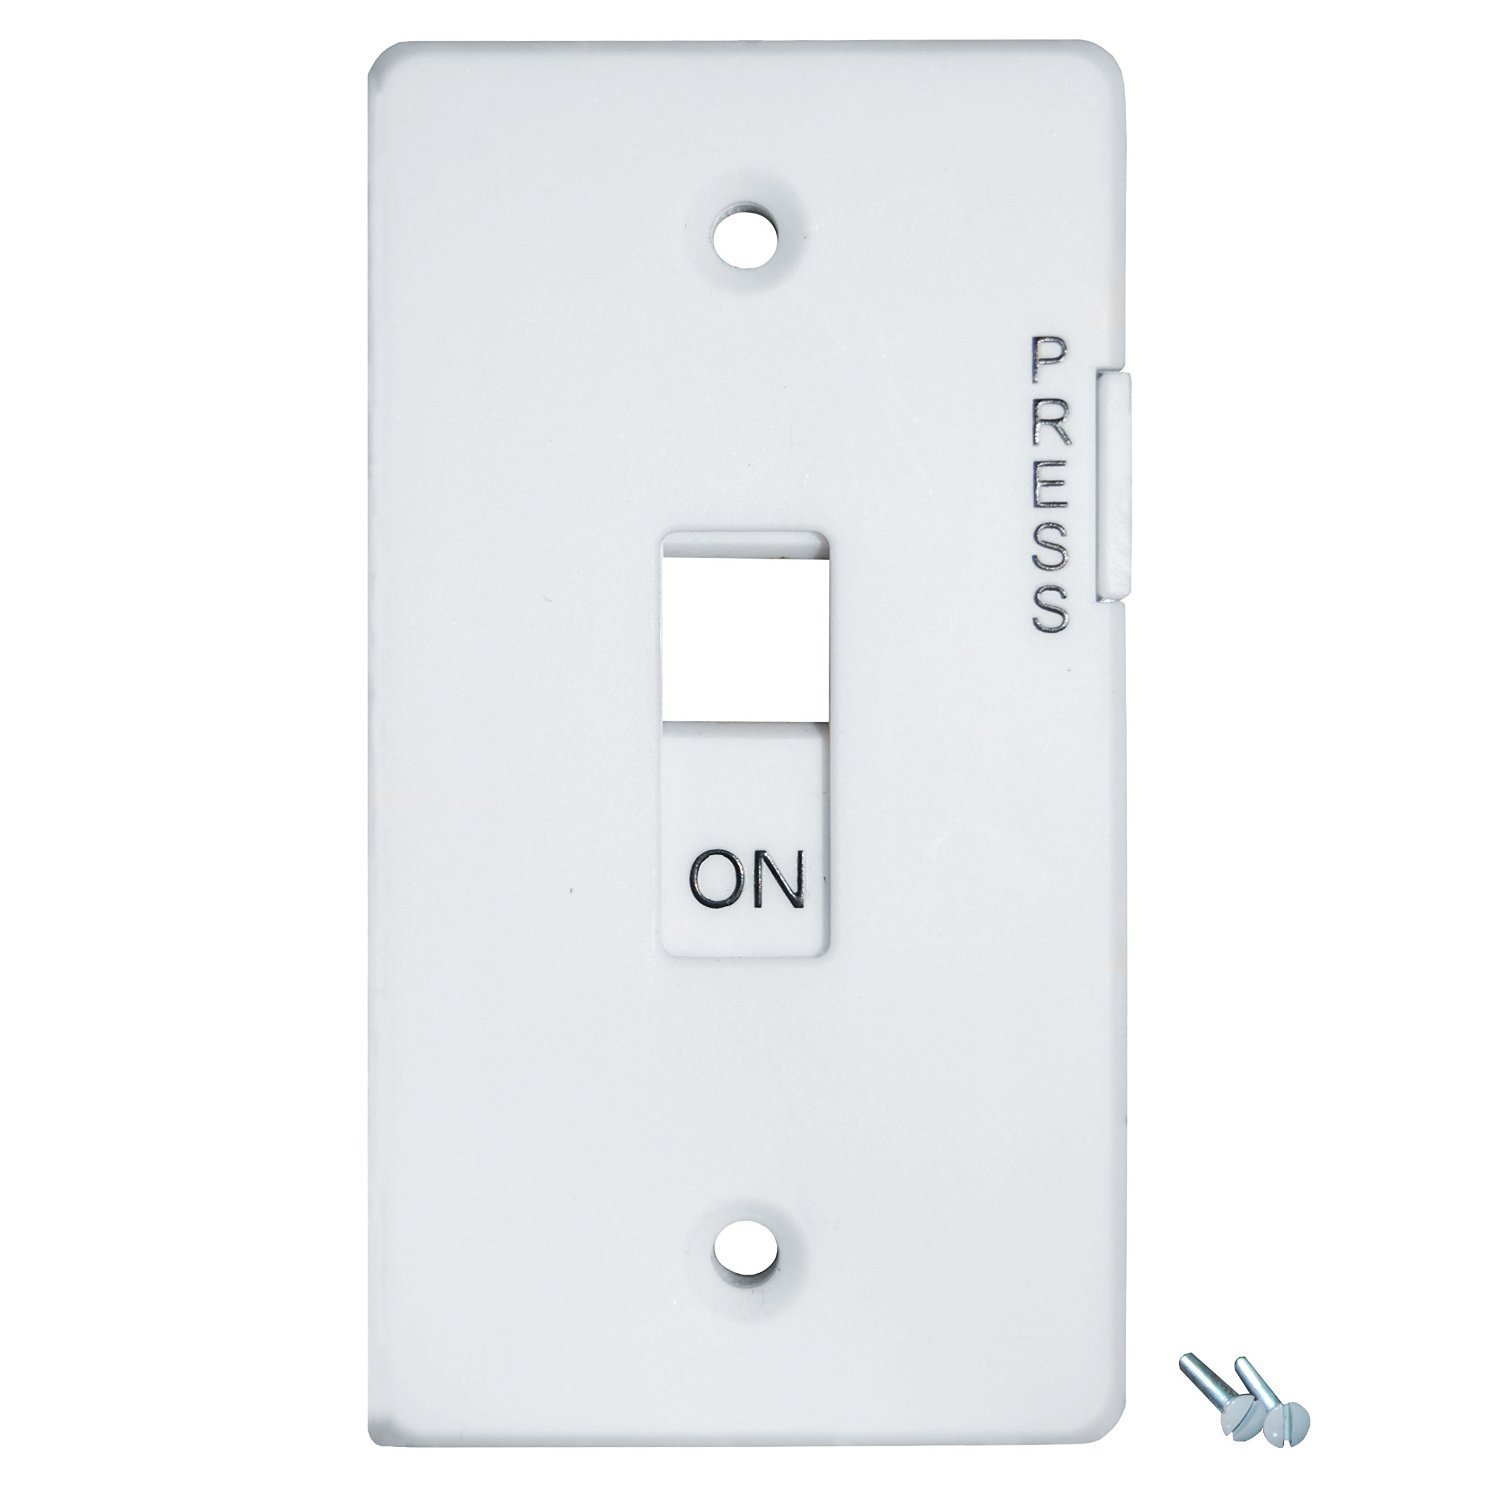 Amazon.com : E-Lock - Light Switch Guard for Locking Switches 